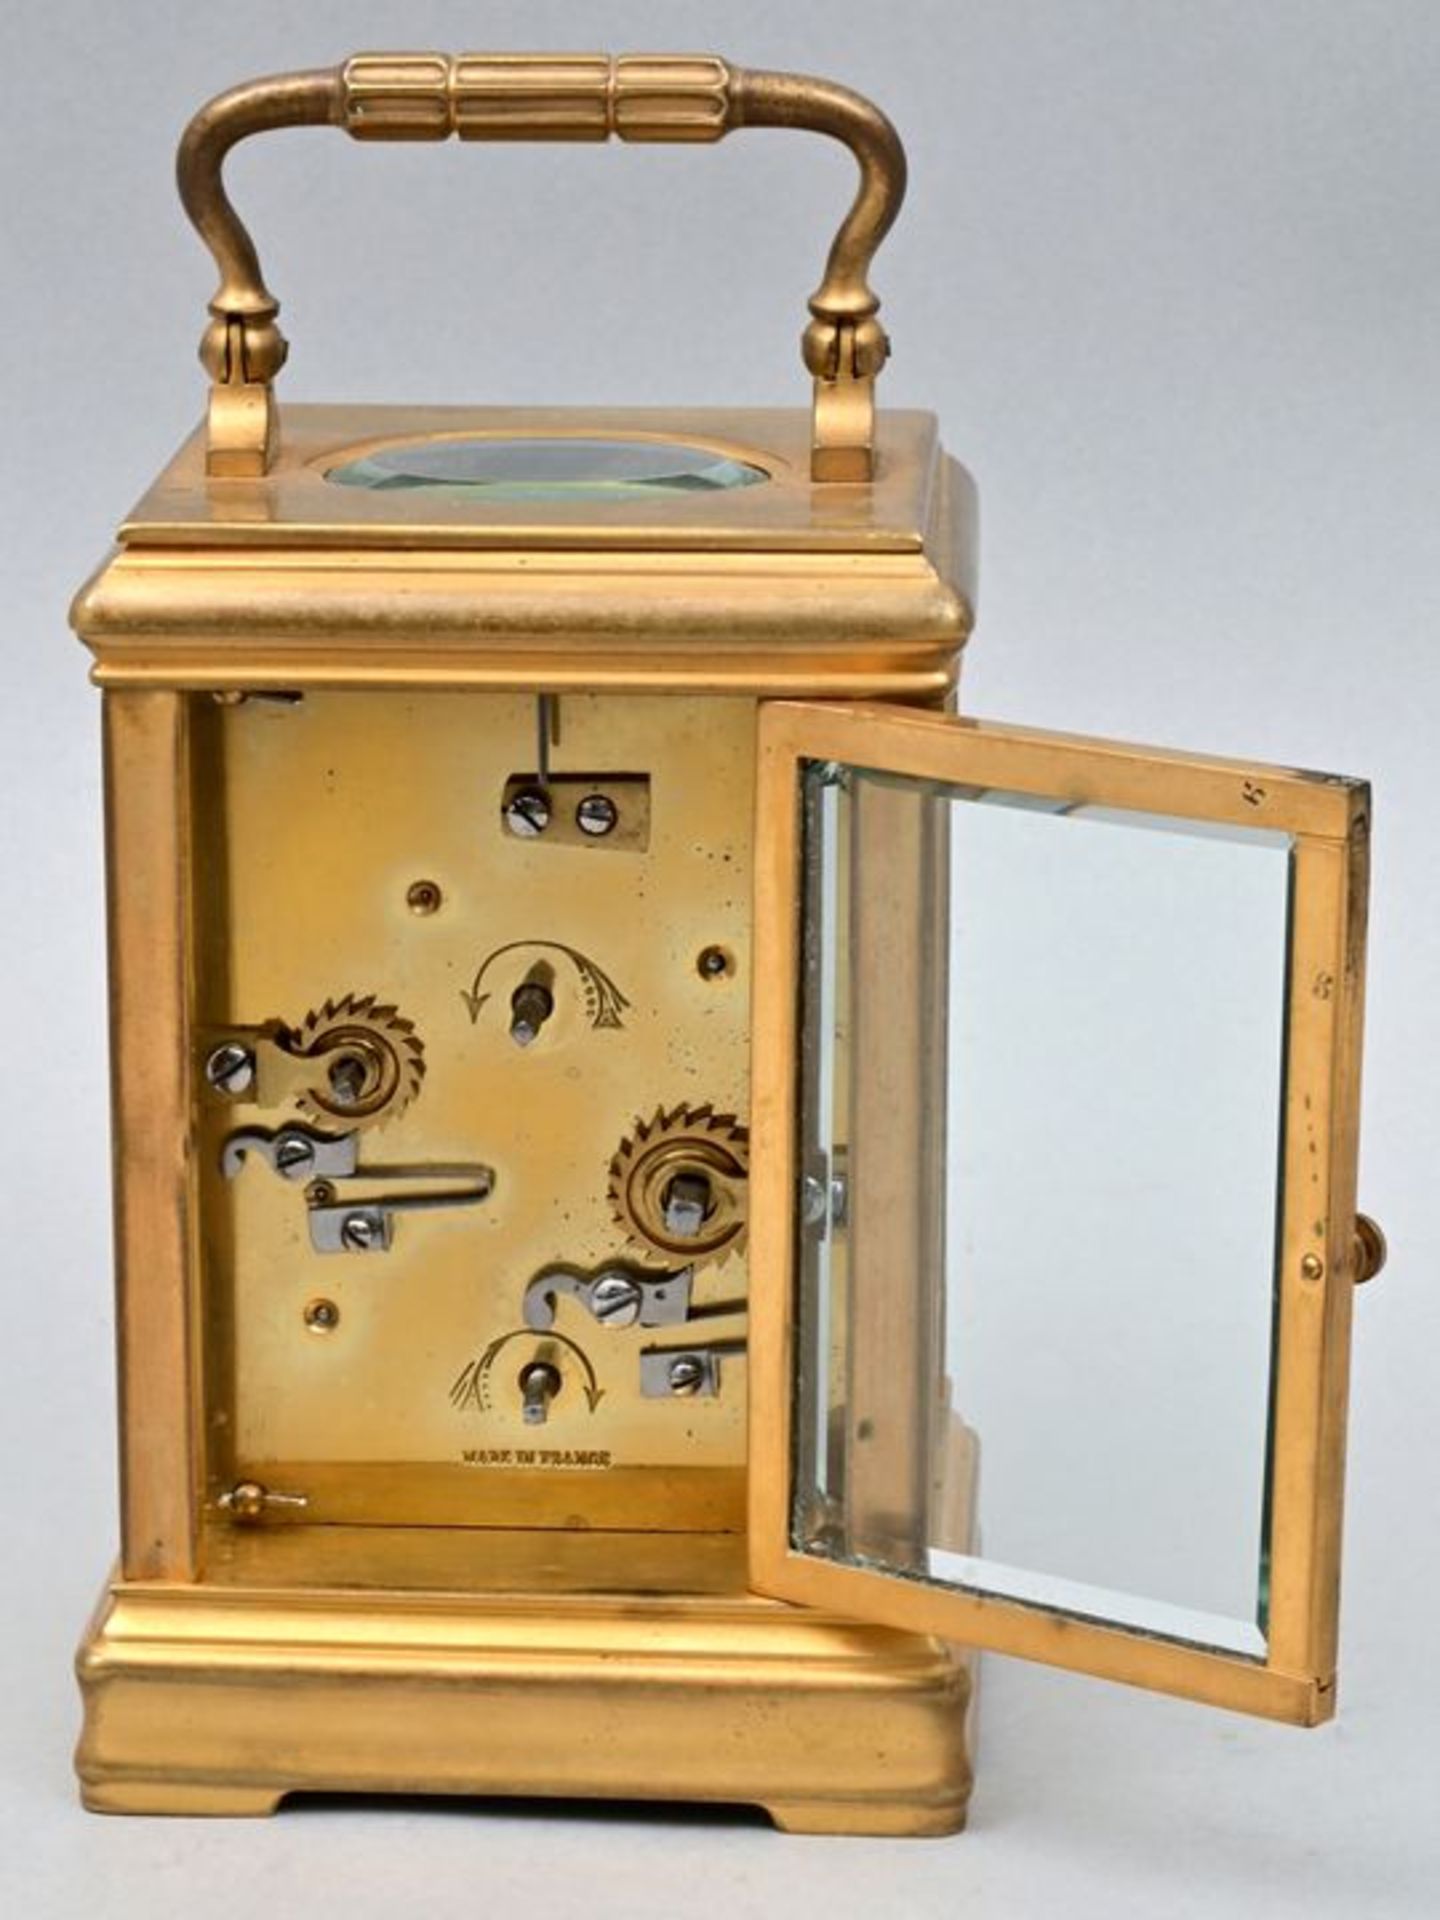 Reiseuhr Anton Hawelk, Wien / Travel clock - Image 6 of 8